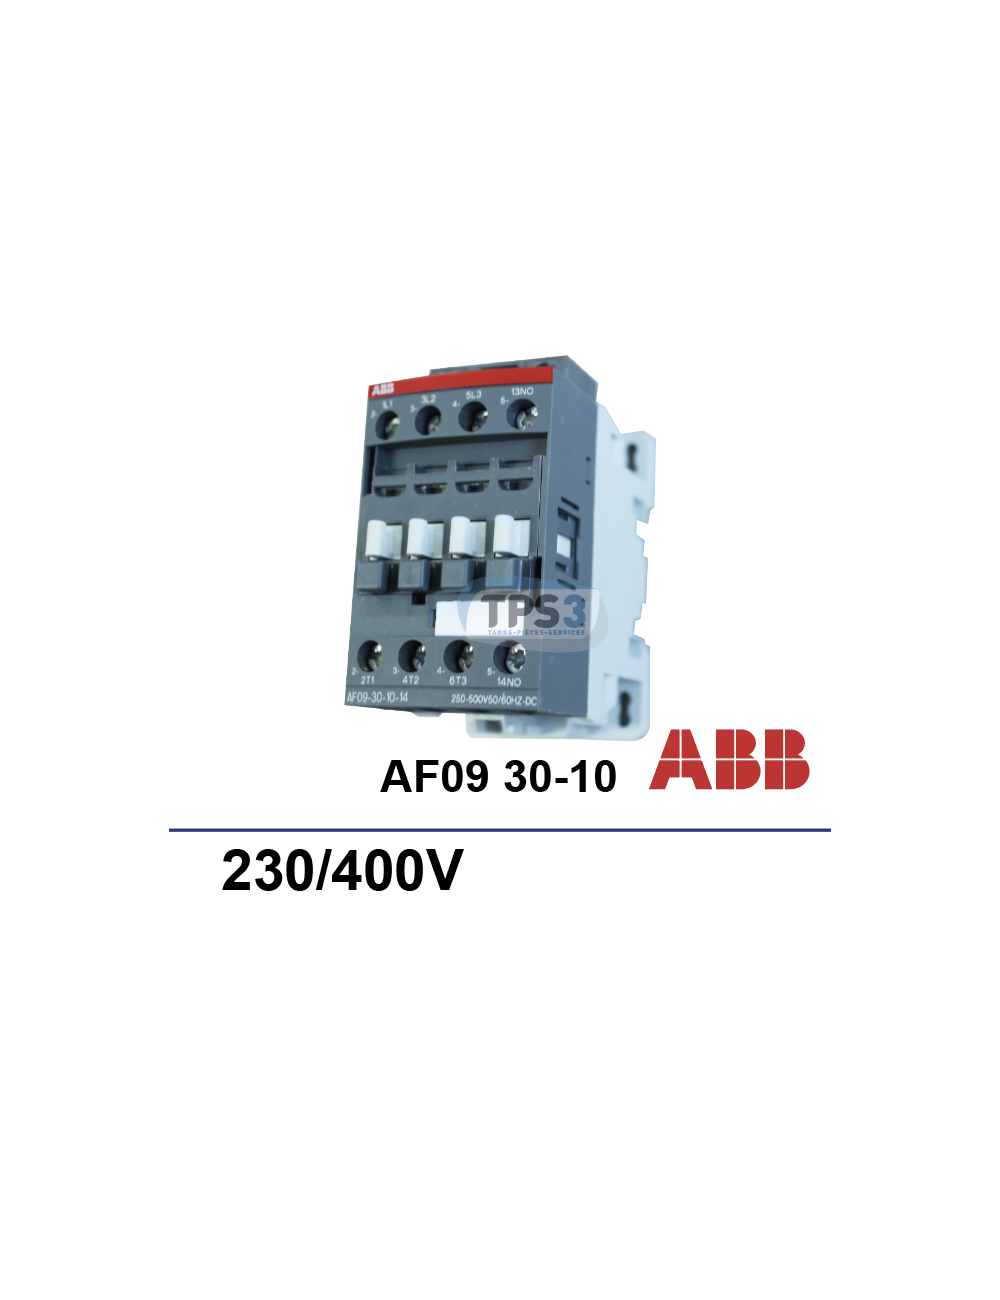 Contacteur AF9 30-10  230/400V